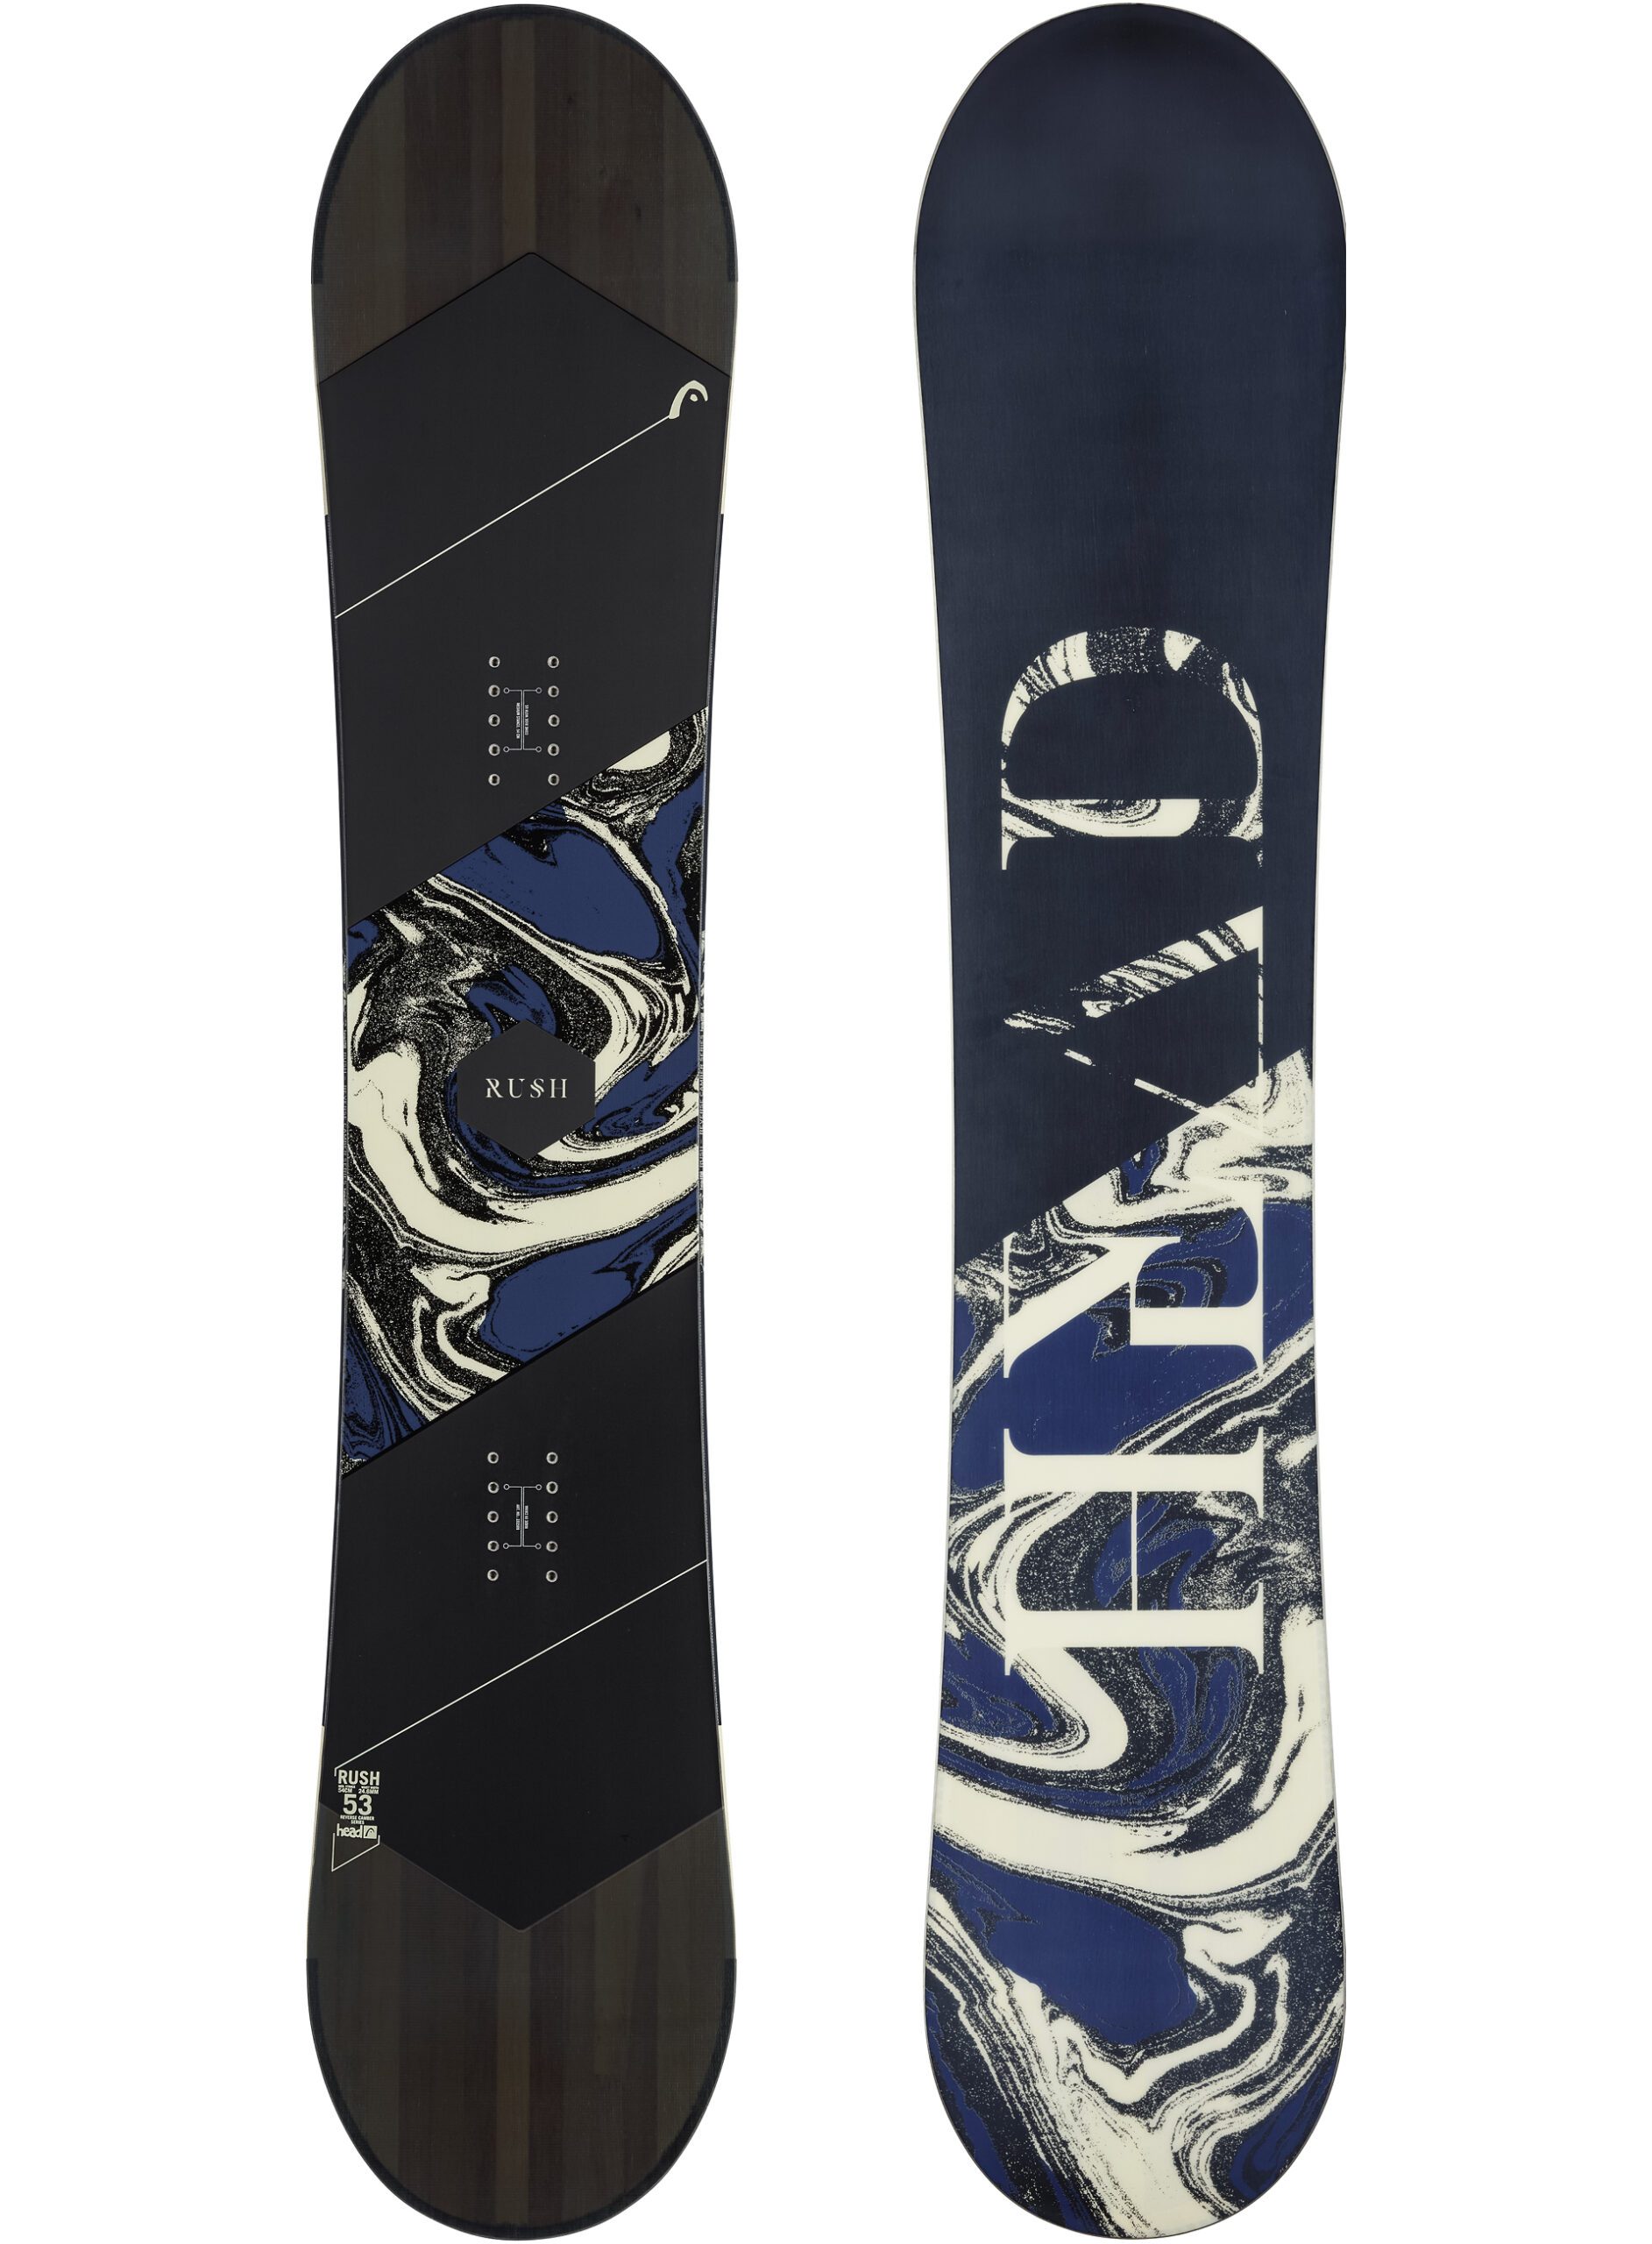 Snowboard-design-head2